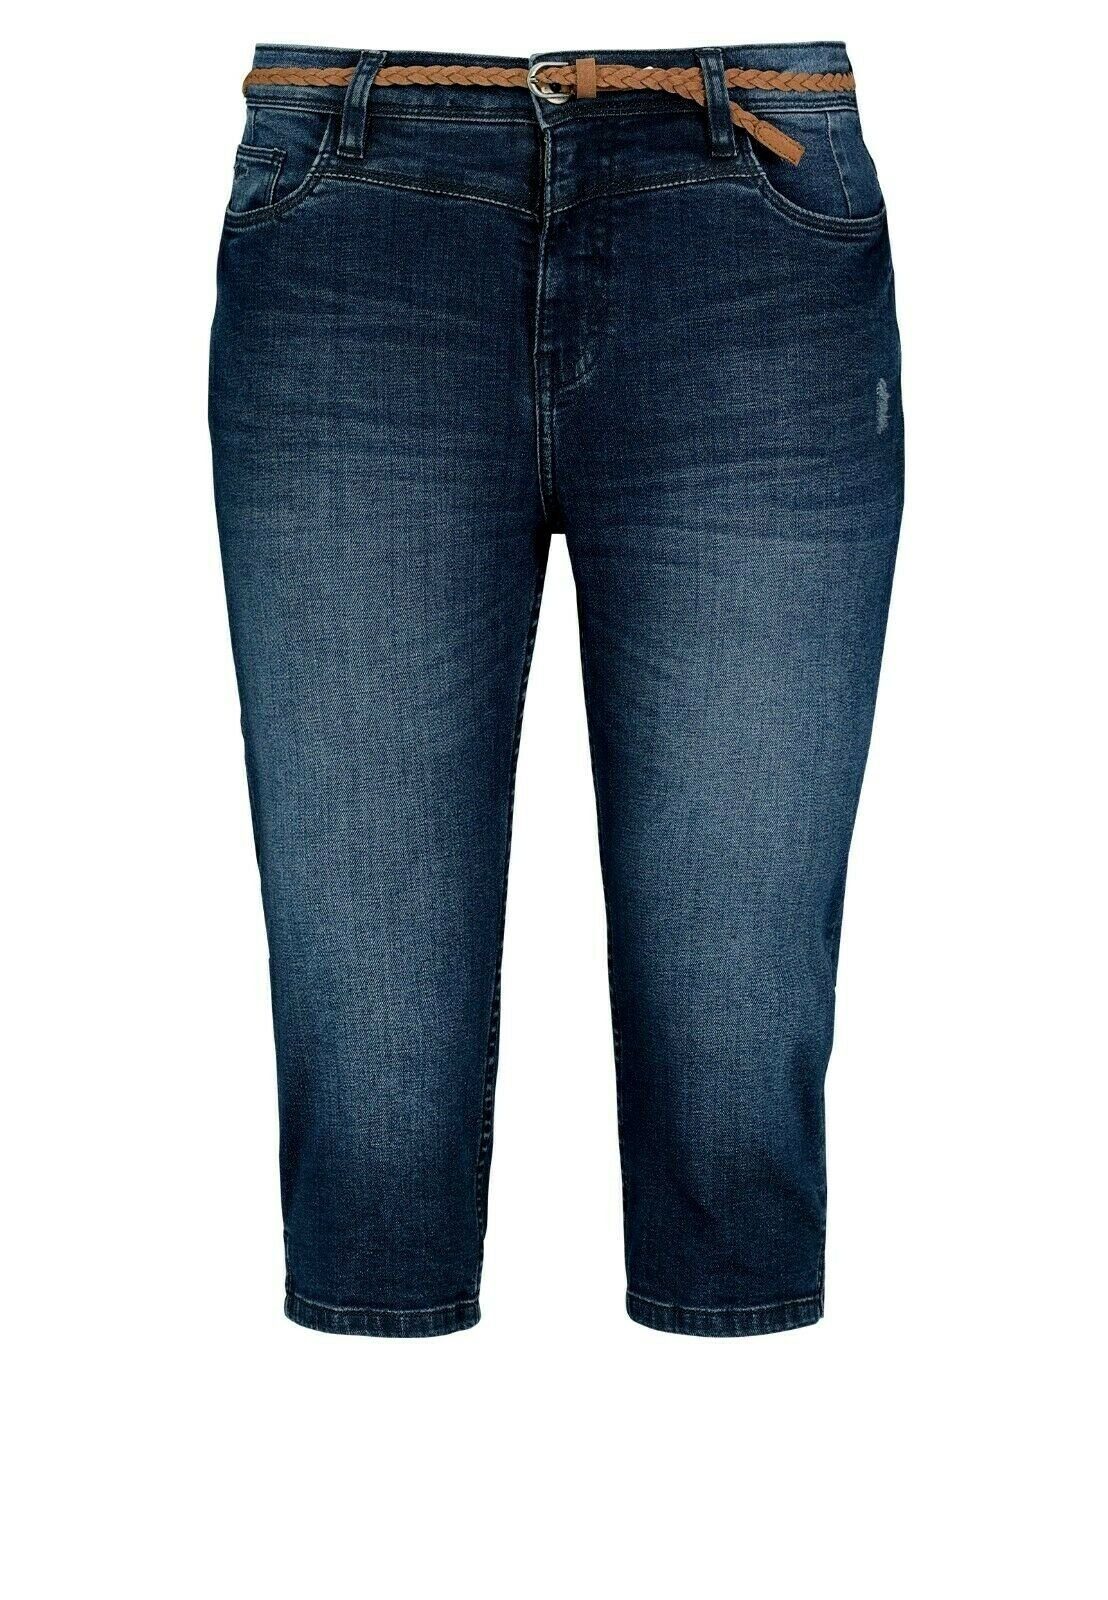 SUBLEVEL Bermudas Jeans Shorts Capri Damen 3/4 Hose Dunkelblau Bermuda Short mit Flechtgürtel Hose